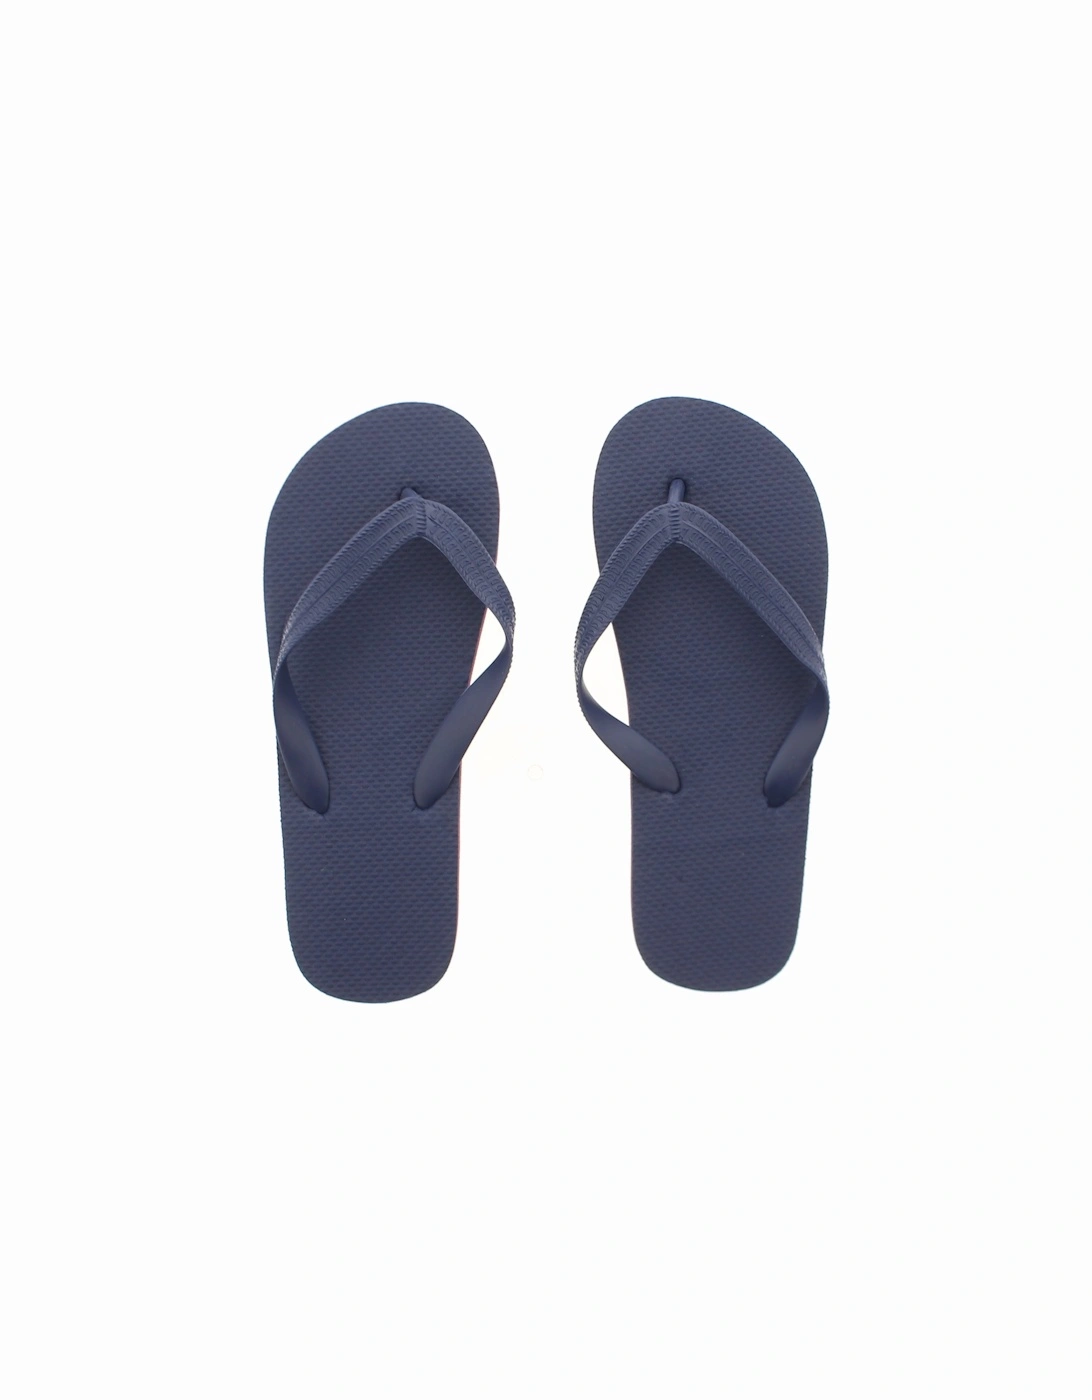 Boys Sandals Sliders plain flip flop beach pool Blue UK Size, 2 of 1